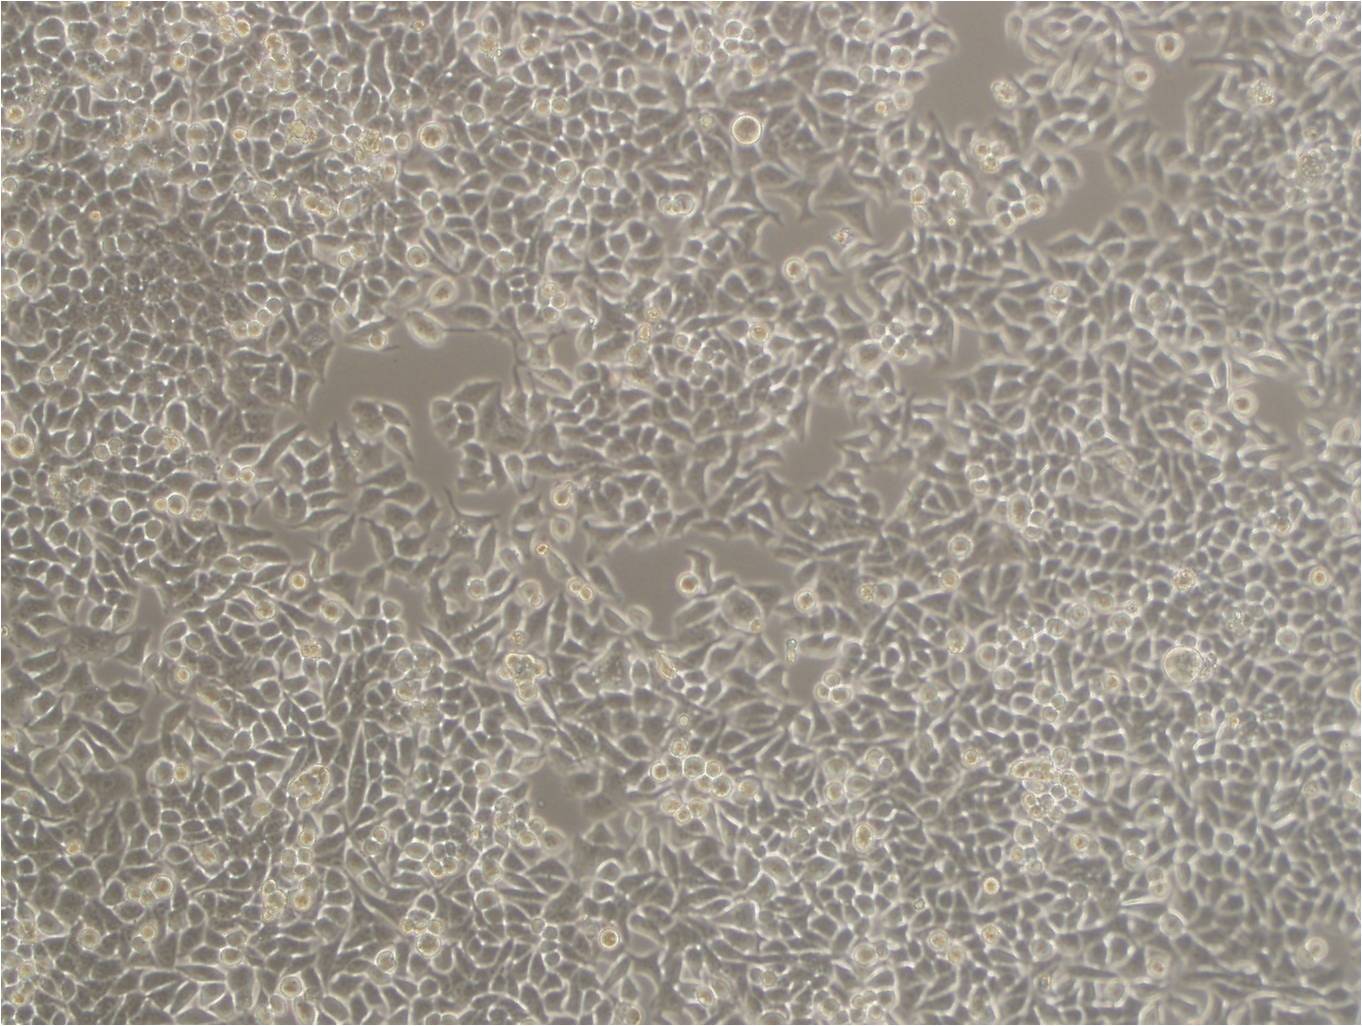 ID8 Cells|小鼠卵巢癌细胞系,ID8 Cells